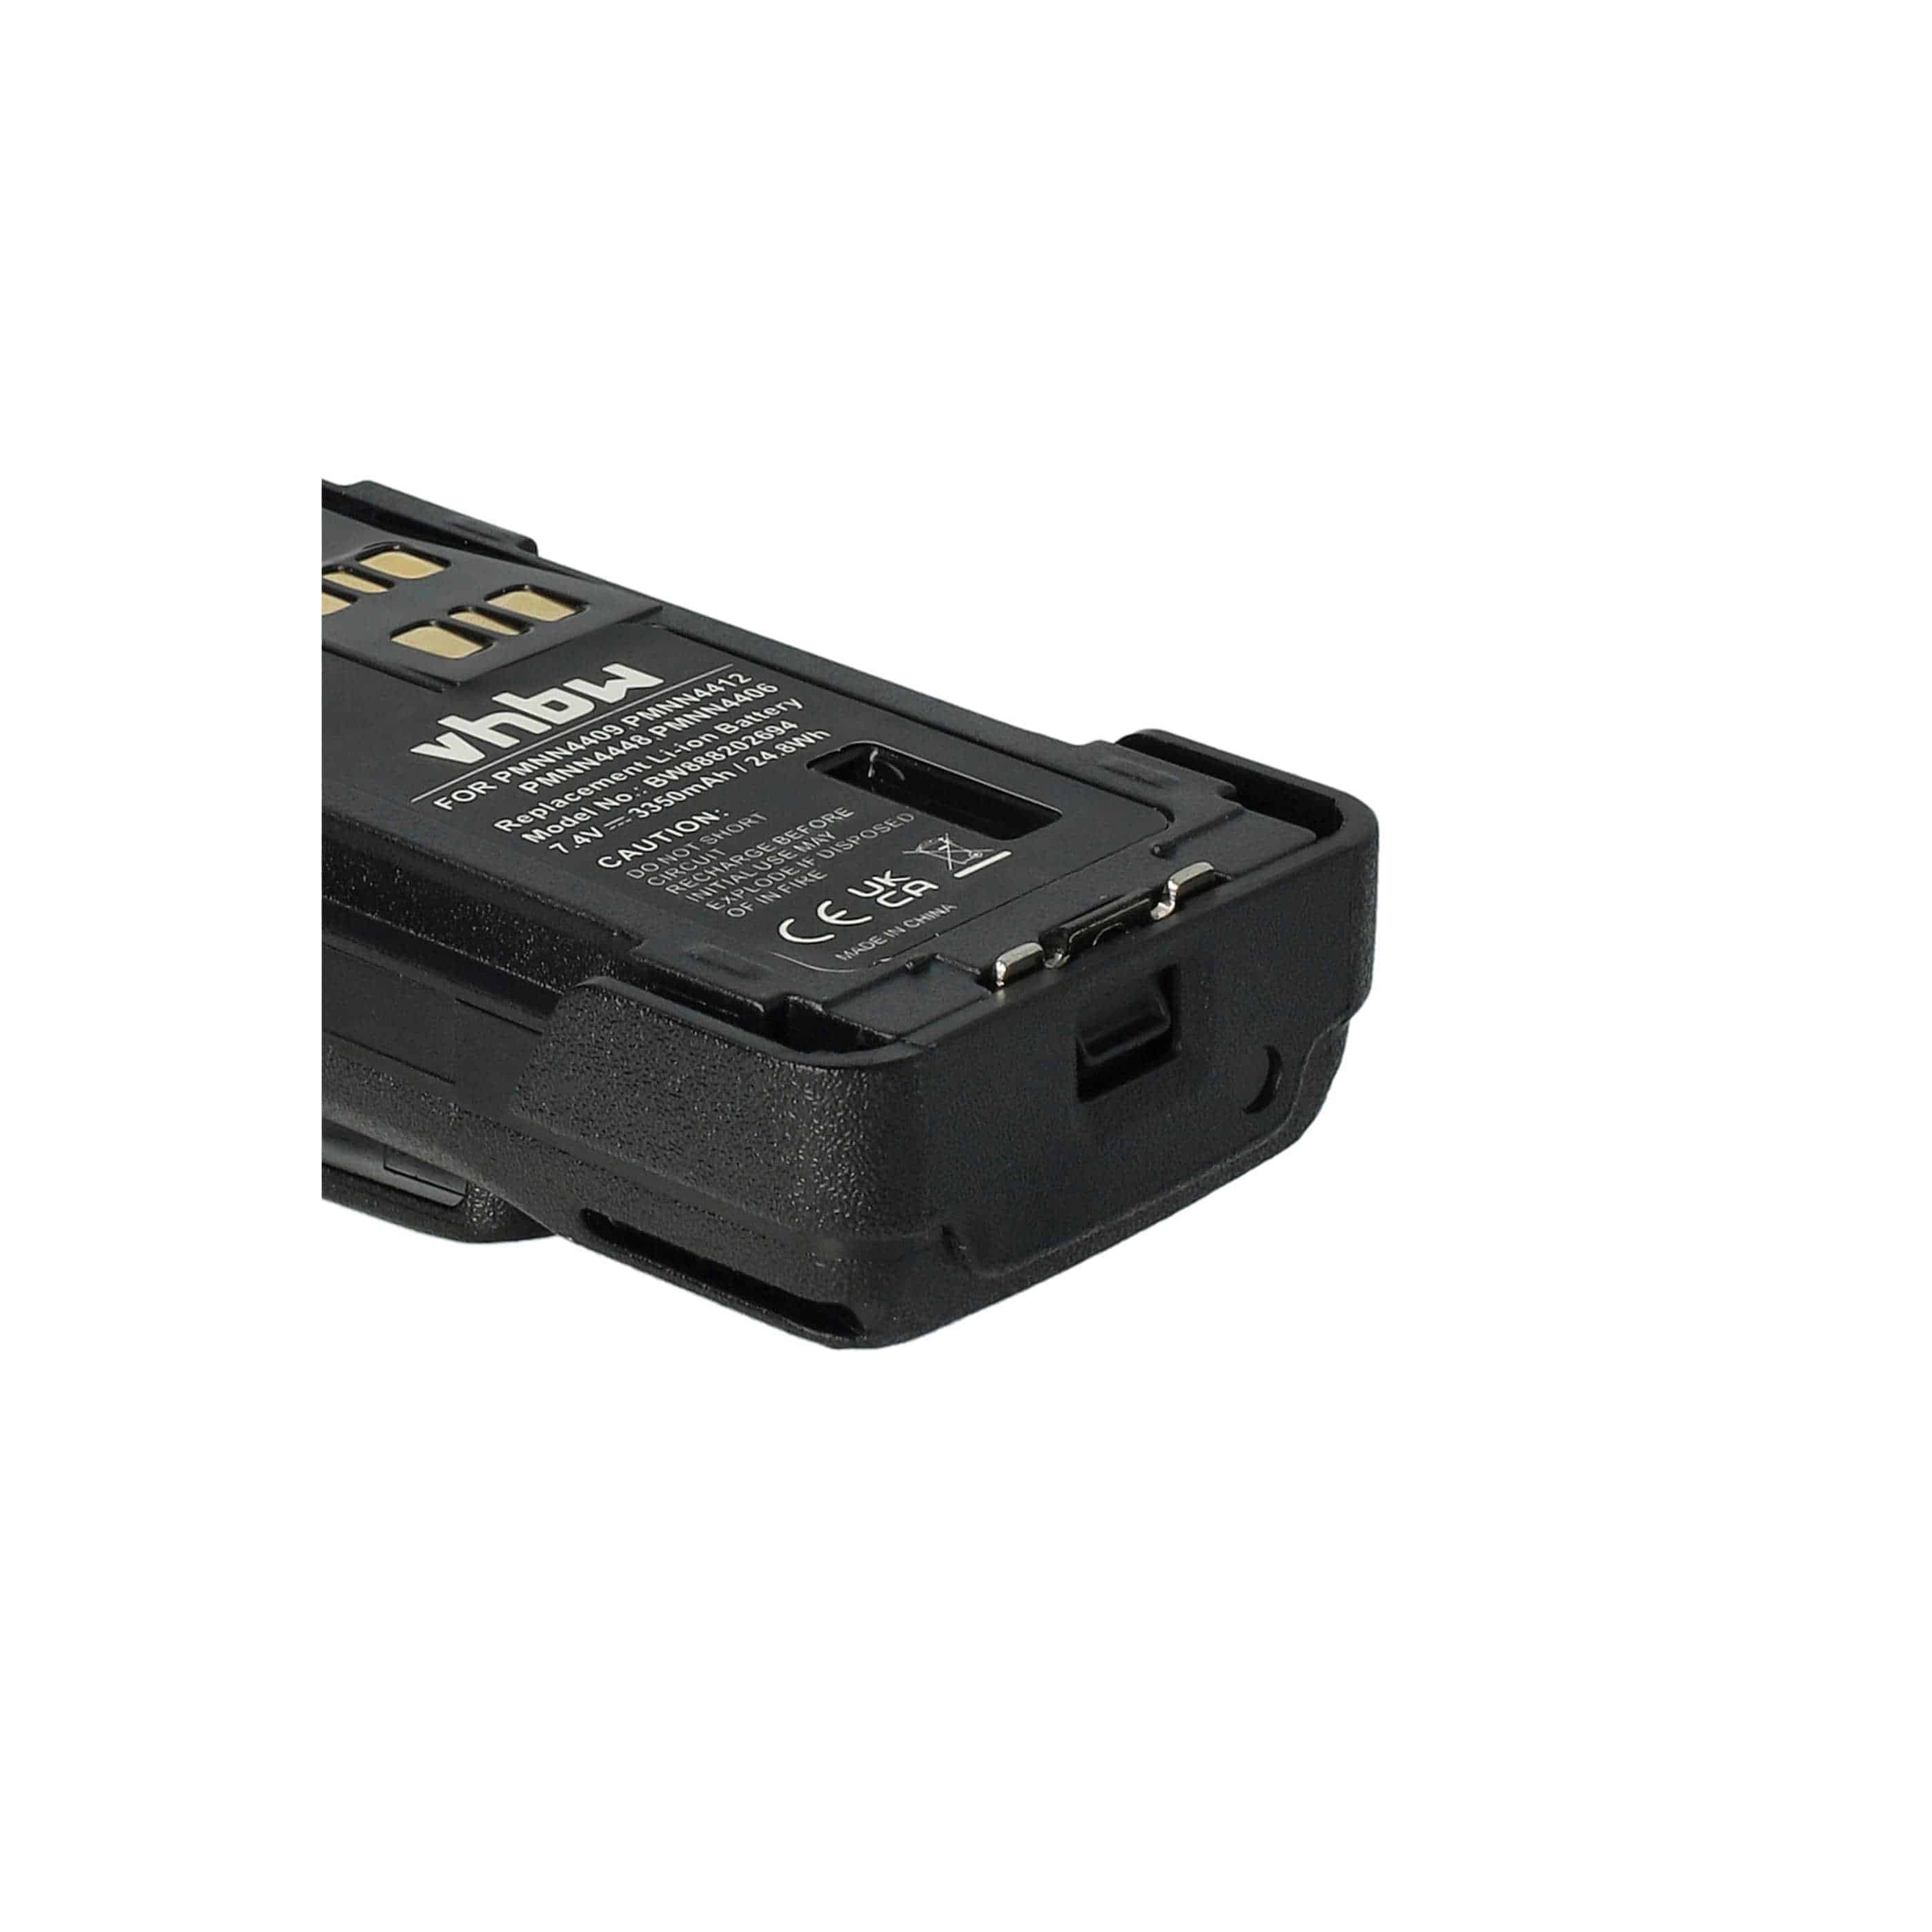 Batteries (5x pièces) remplace Motorola PMNN4406BR, PMNN4406 pour radio talkie-walkie - 3350mAh 7,4V Li-ion